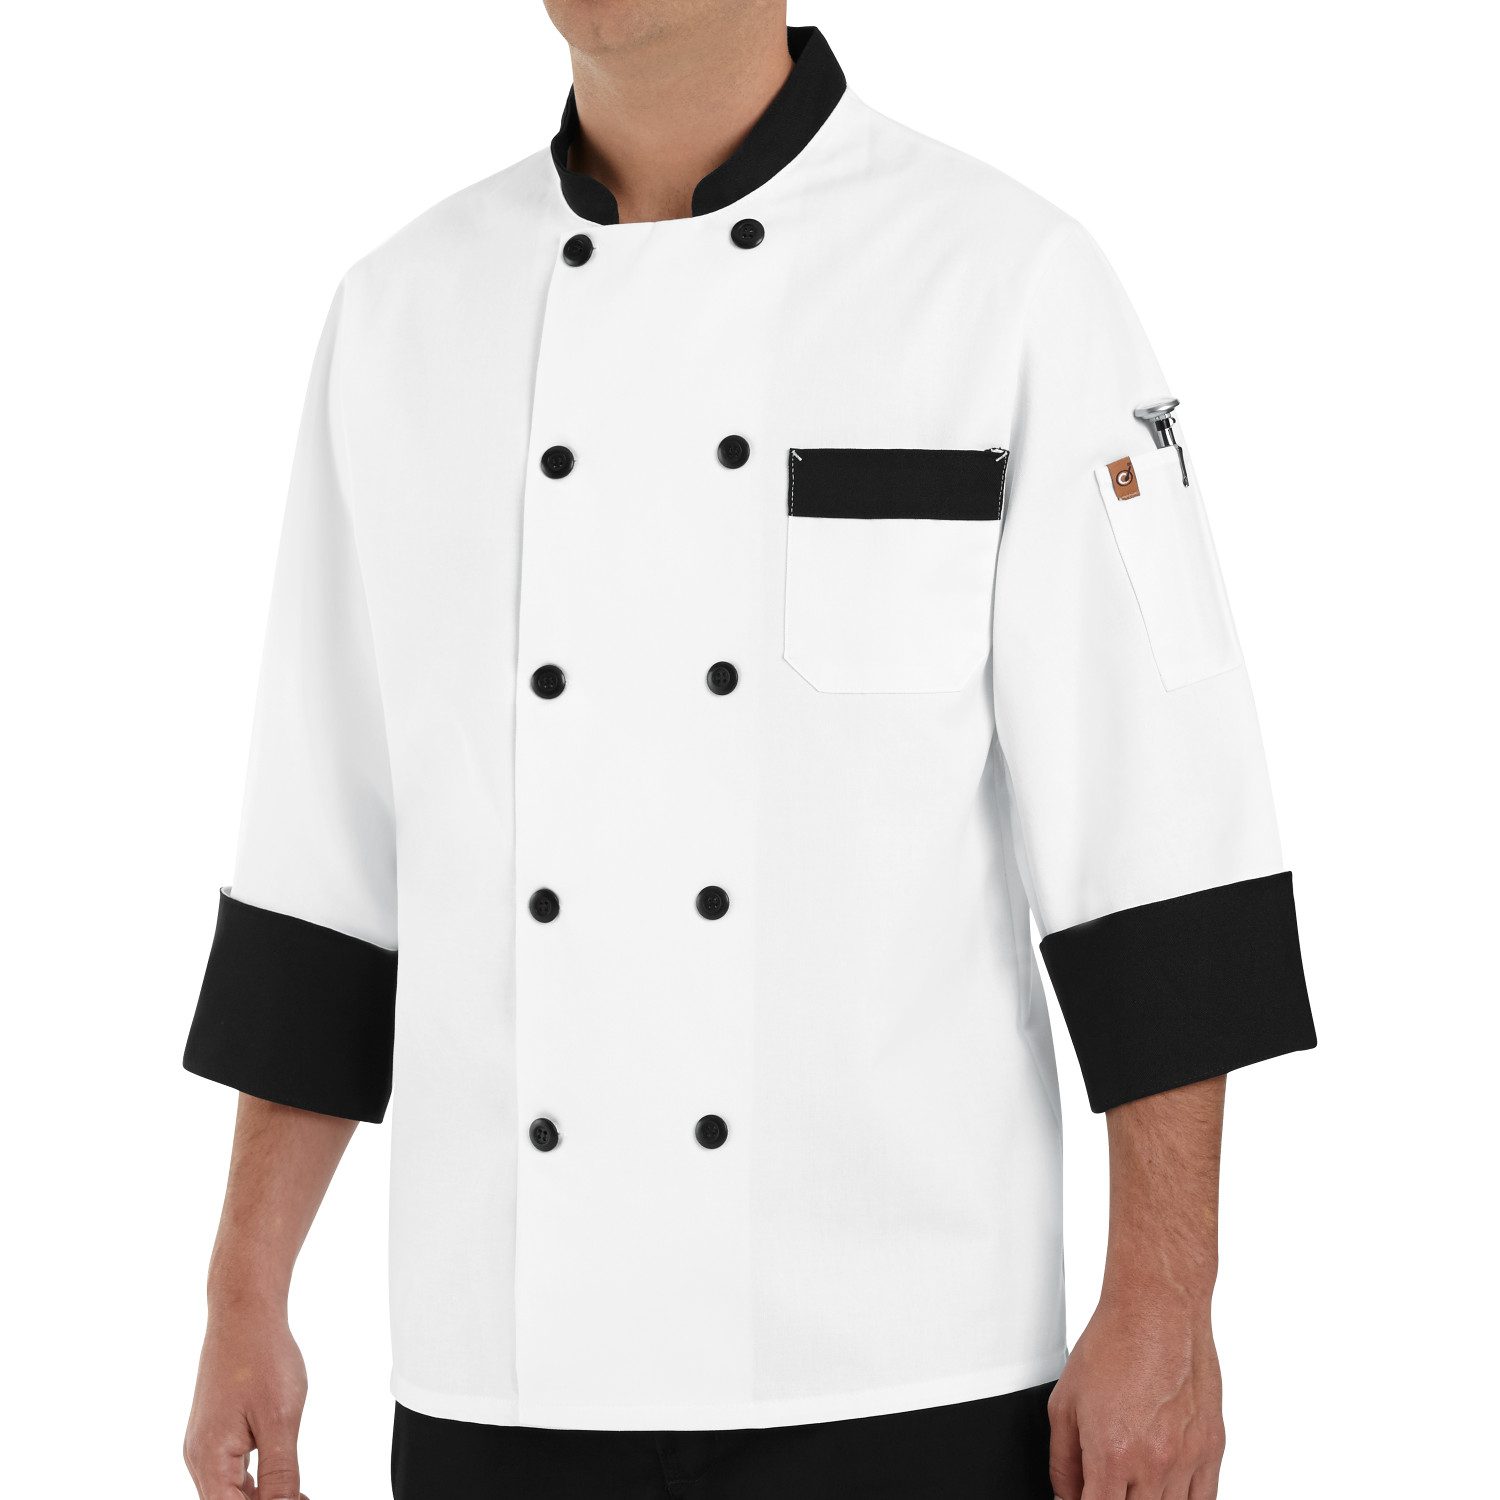 Garnish Chef Coat KT74BT